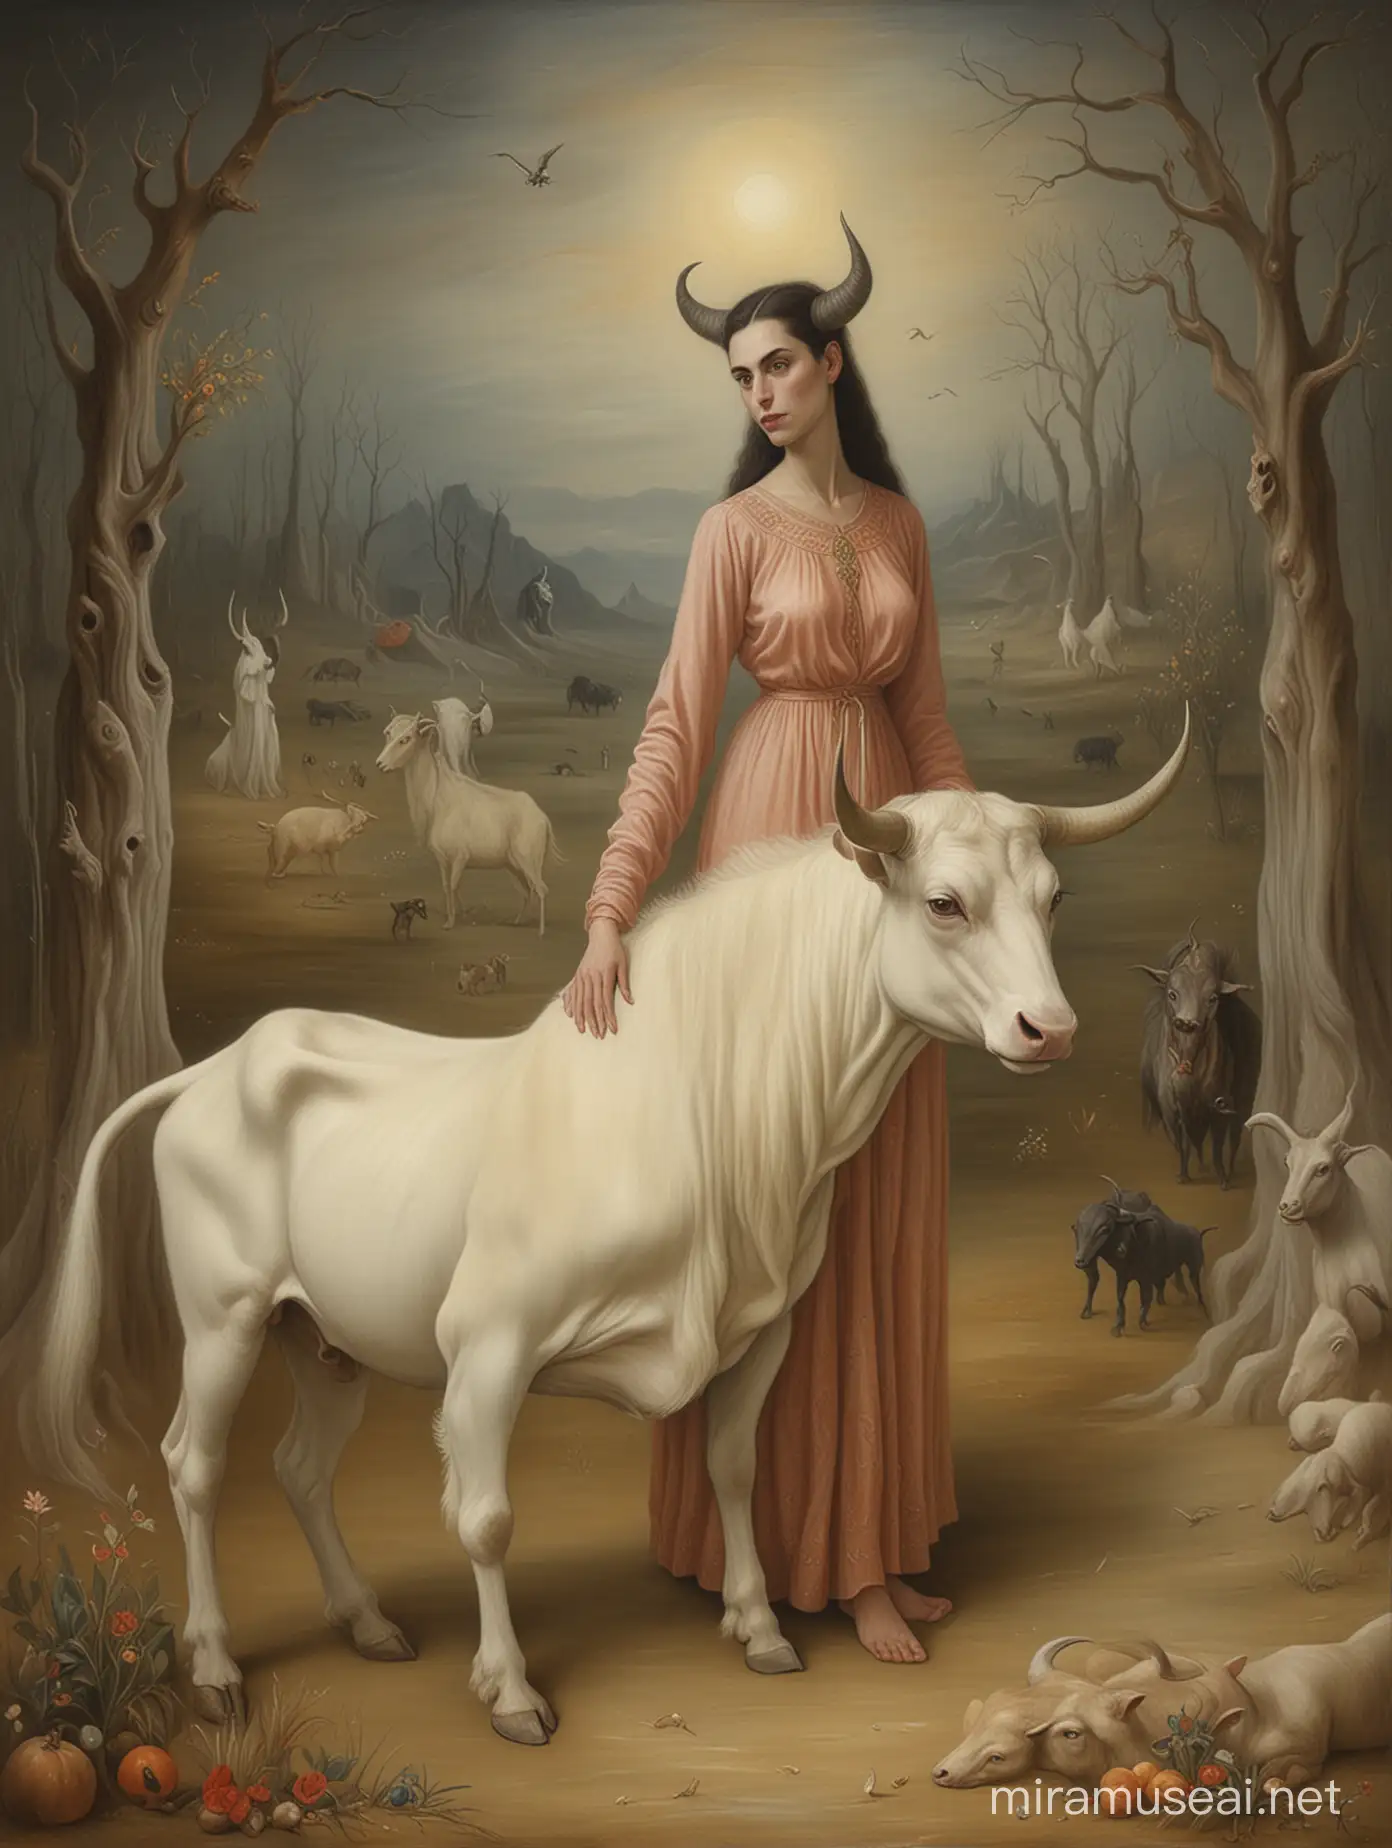 Surrealistic Depiction of Female Figure and White Bull in Desert Landscape